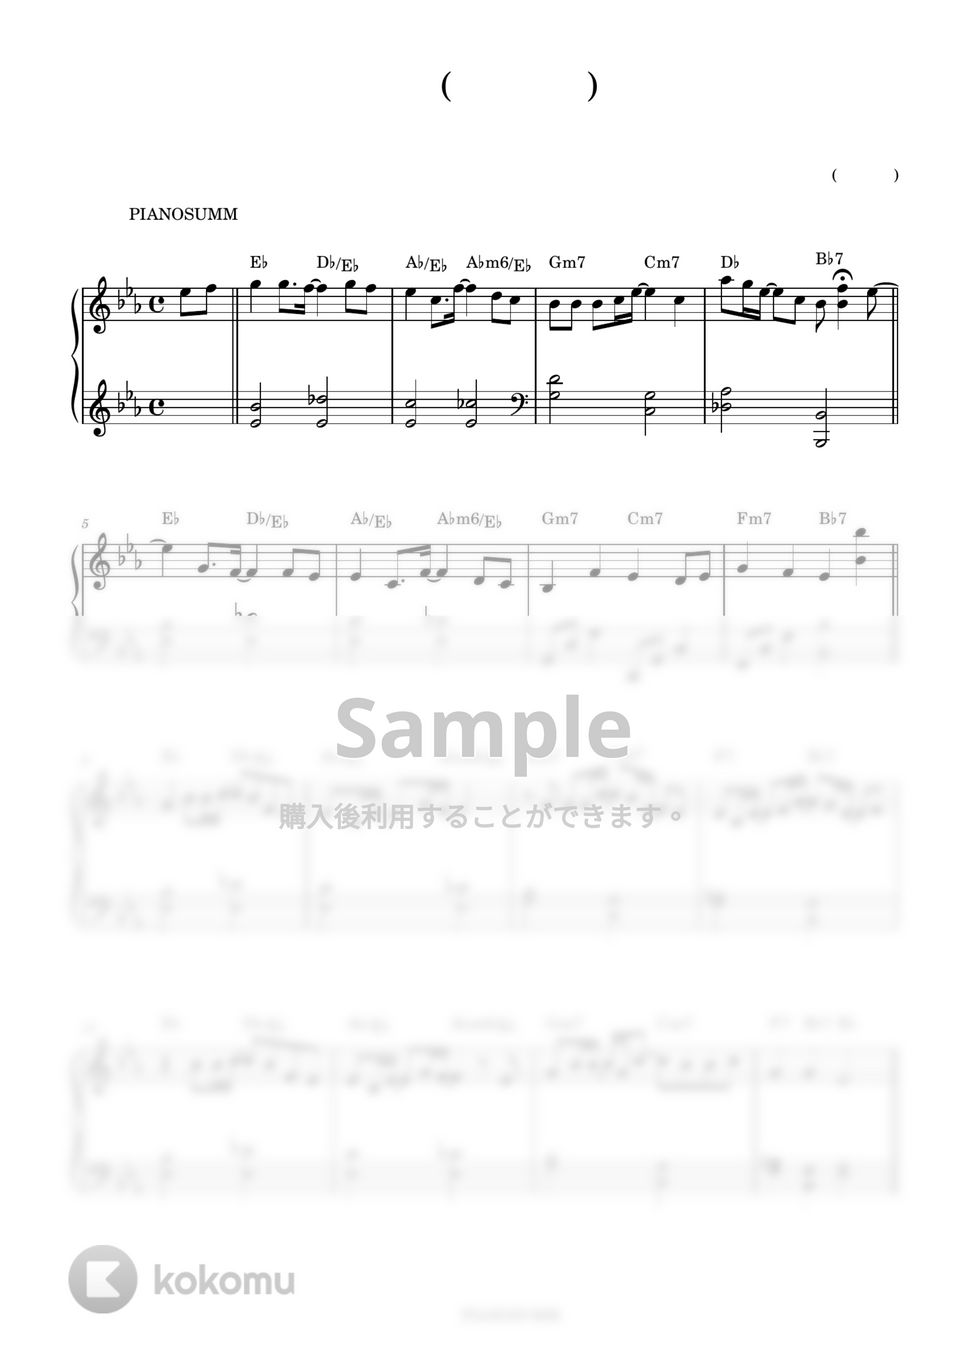 MELOMANCE(멜로망스) - Invitation(초대) (Easy ver) by PIANOSUMM